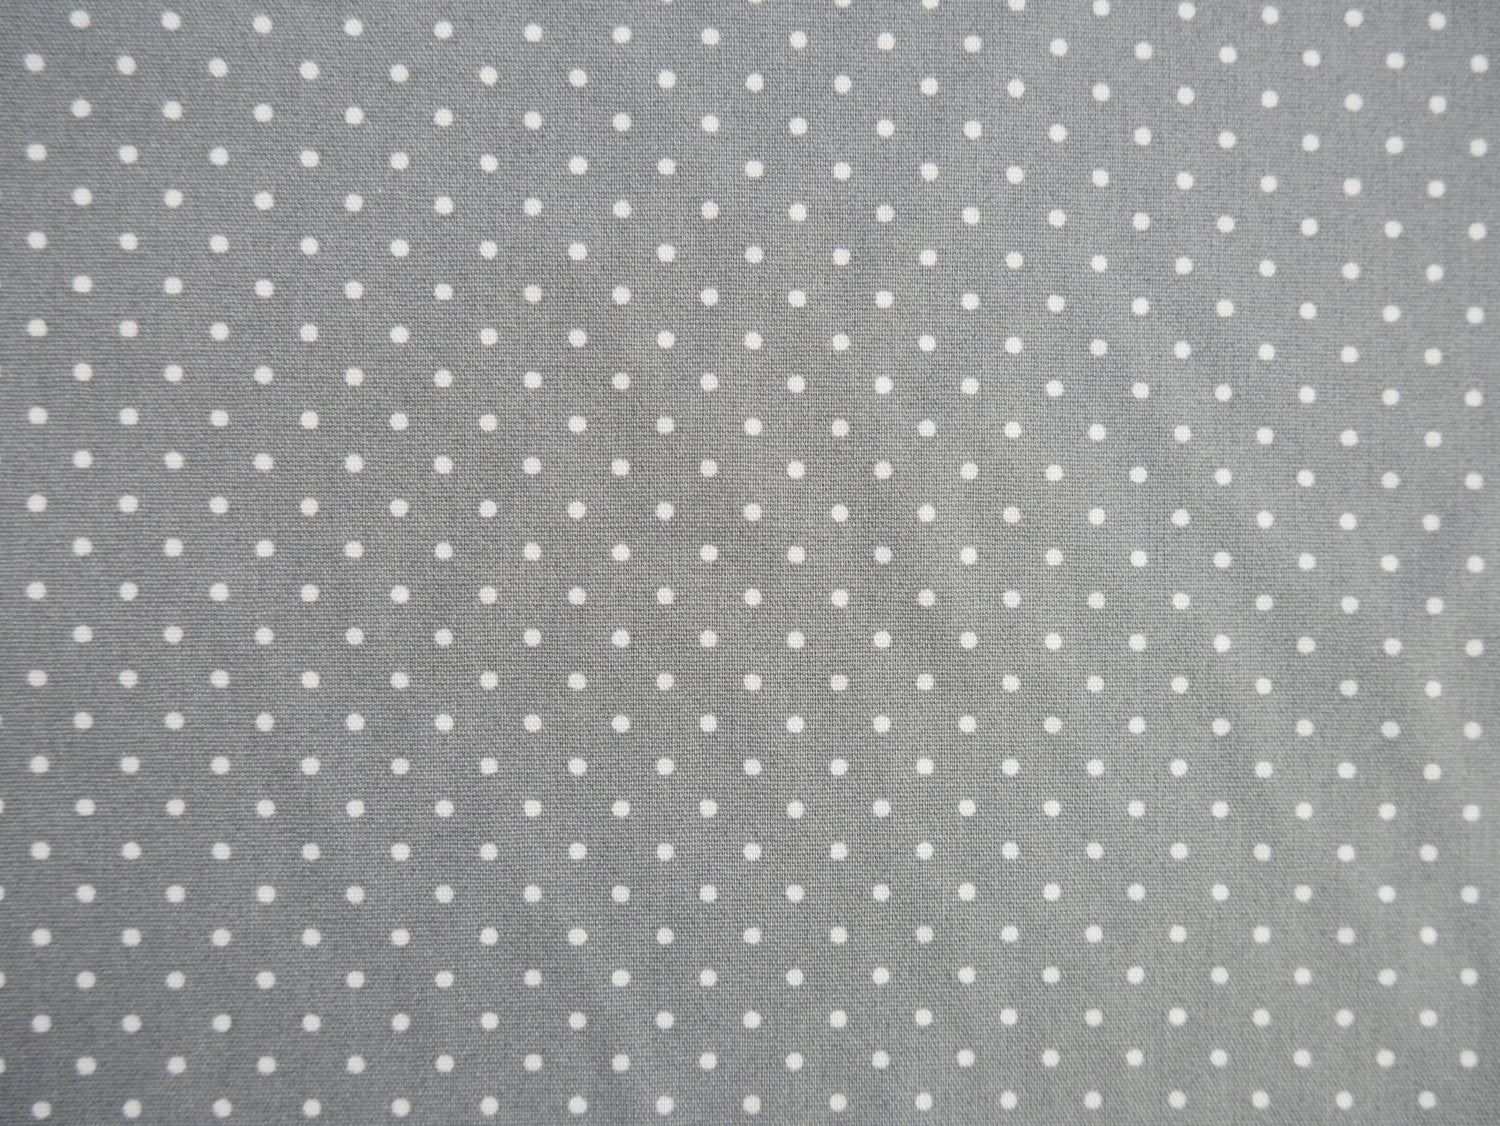 Pin-Spot Printed Cotton, Grey £8.50 p/m-Fabric-Flying Bobbins Haberdashery